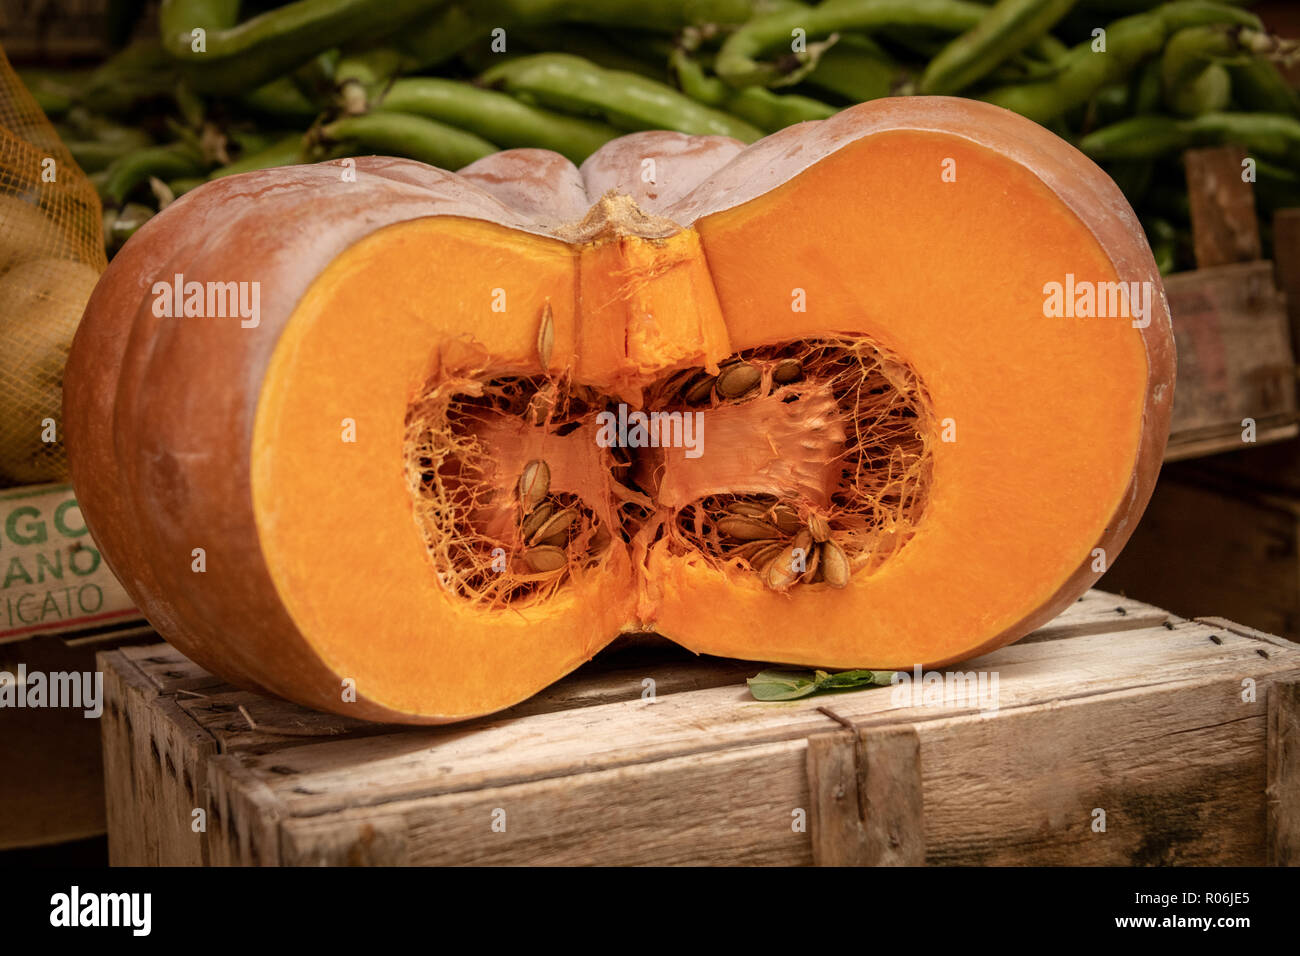 Pumpkin Sliced Open on a Wooden Box in Market Stock Photo